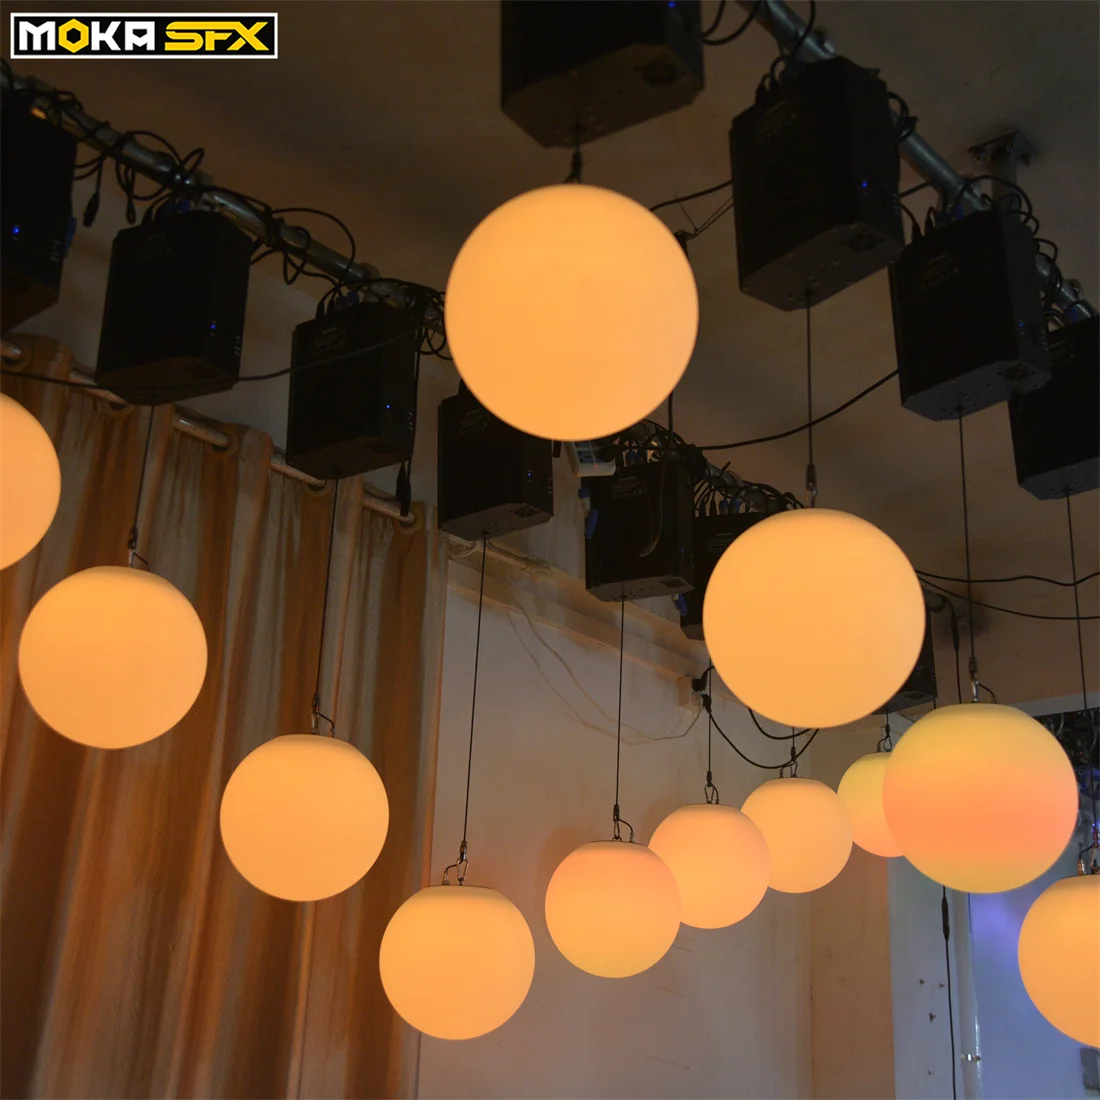 MOKA SFX RGB DMX Lifting Ball LED Effect Light for Nightclub Colorful Kinetic Stage Light Professional Up Down Winch Ball Light